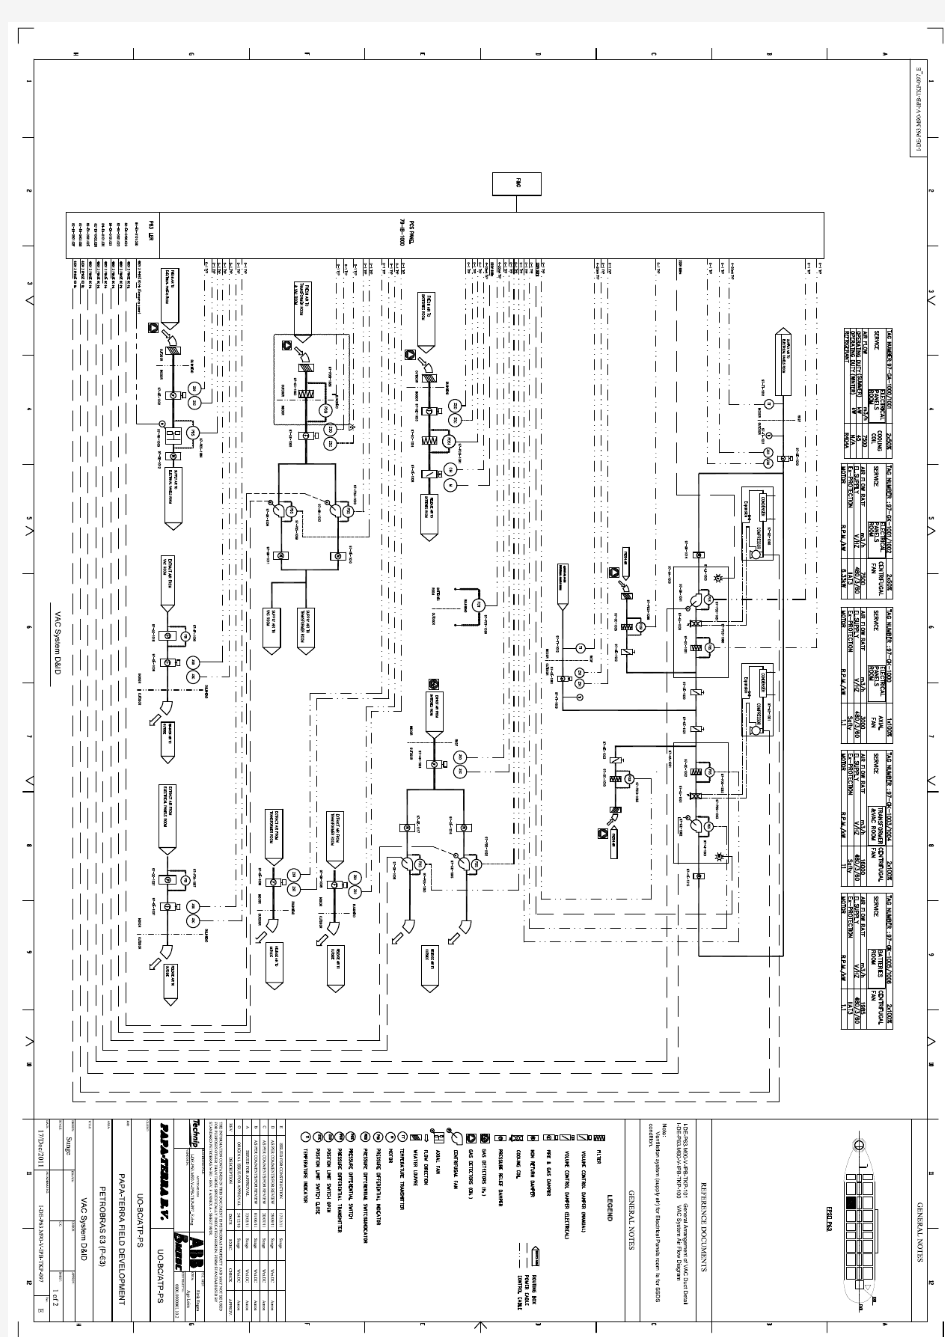 VAC System Duct & Instrument Diagram